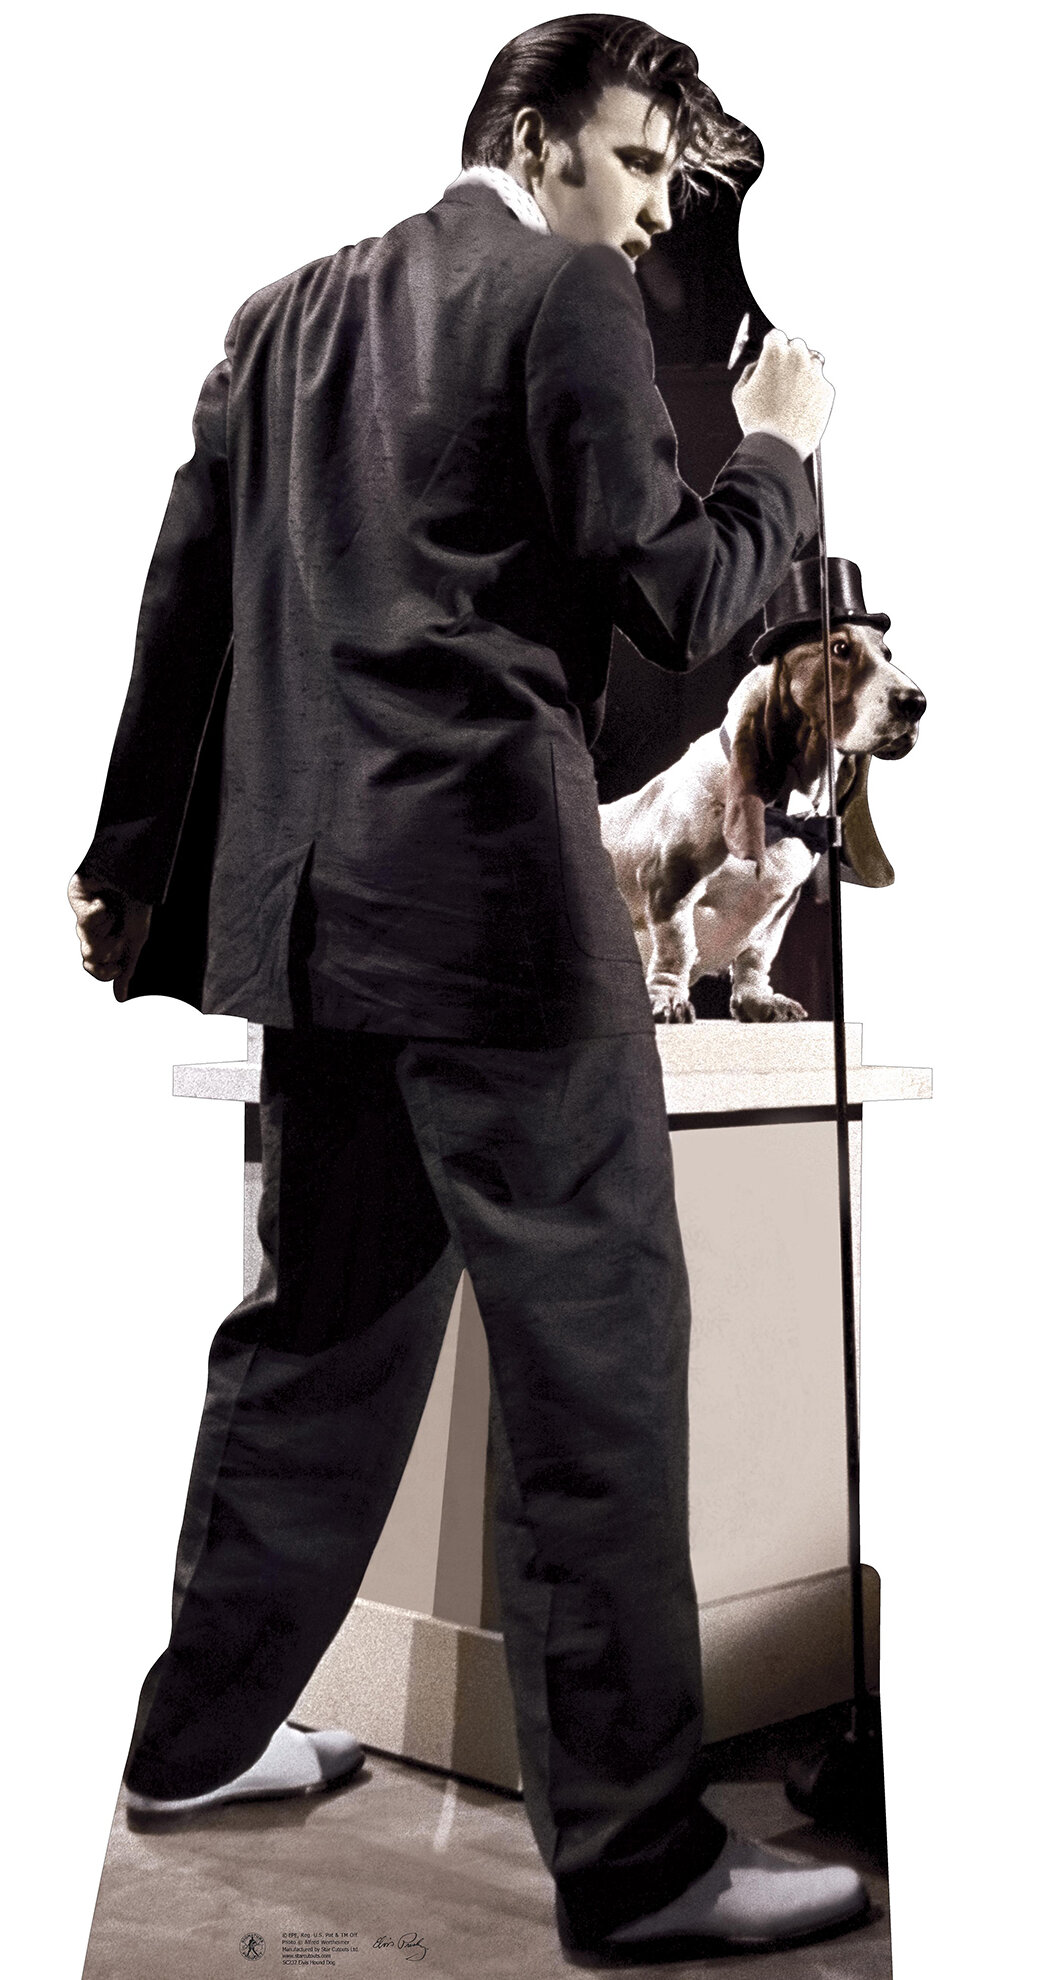 elvis presley performing hound dog